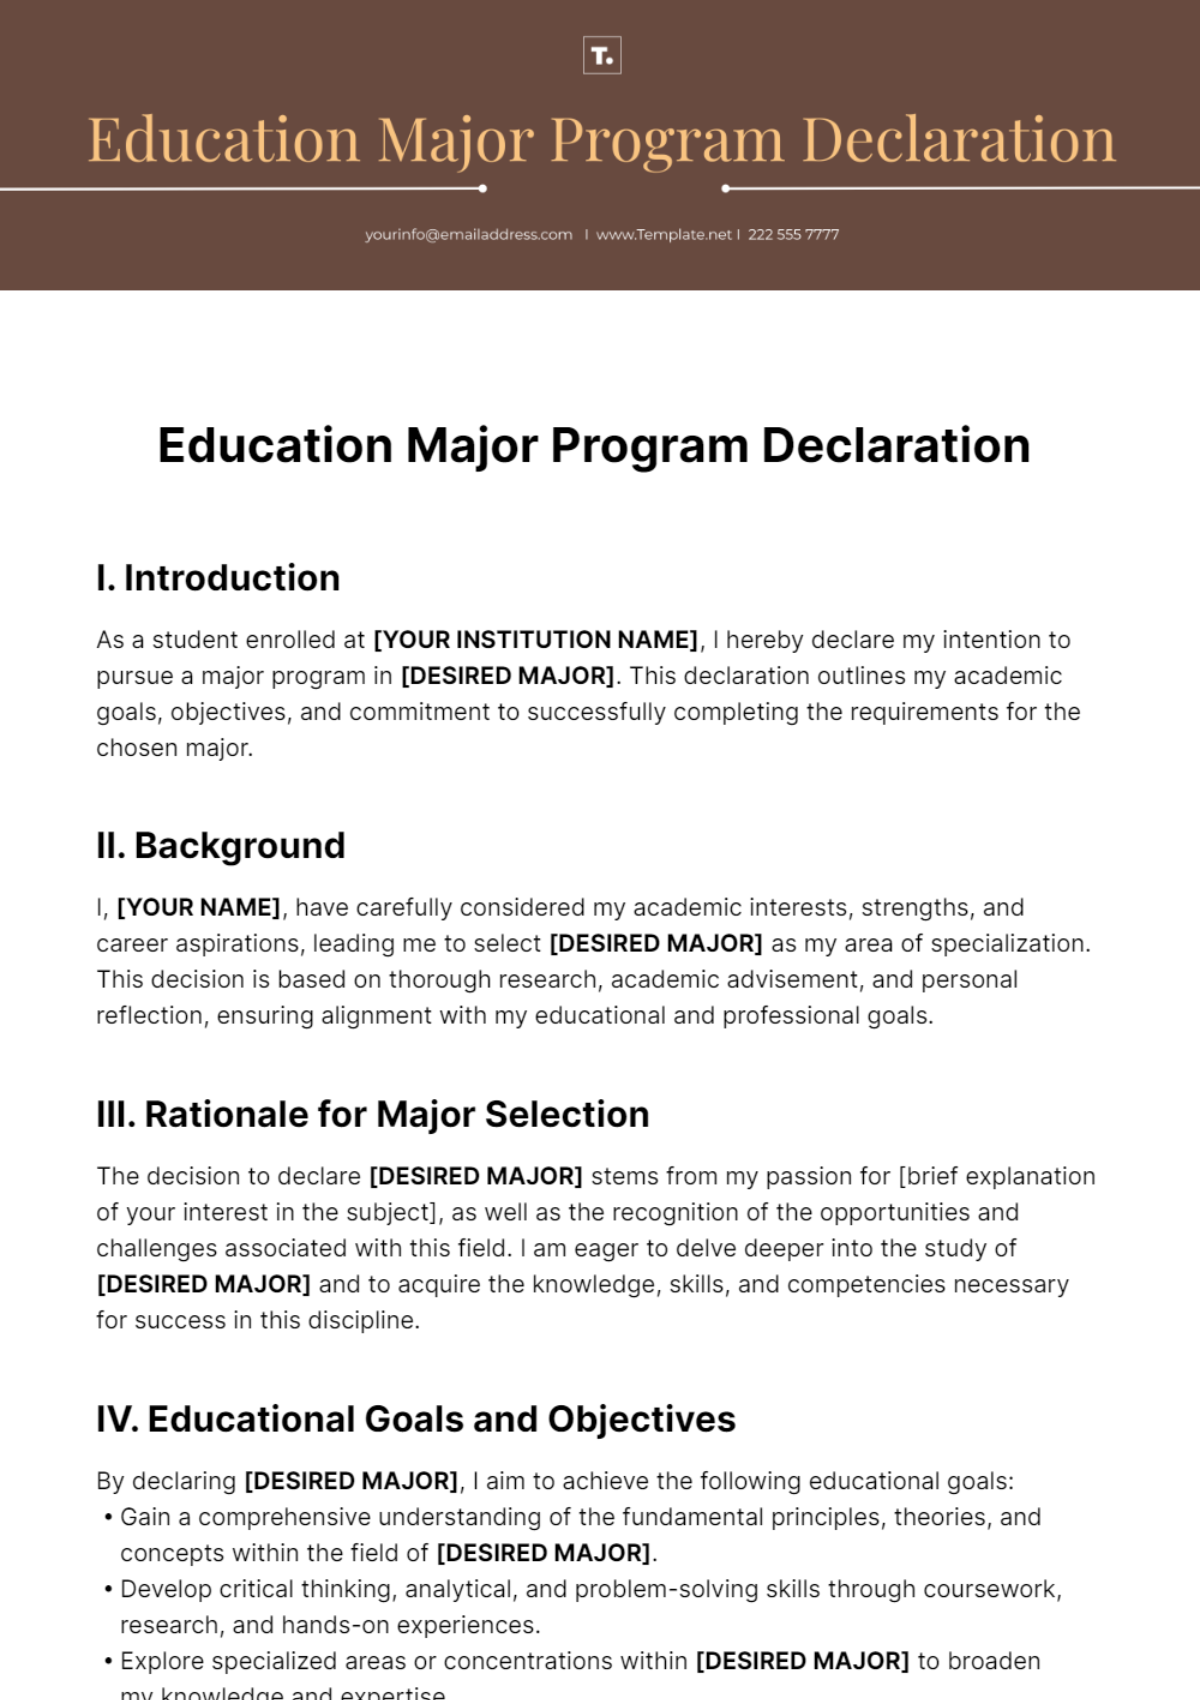 Education Major Program Declaration Template